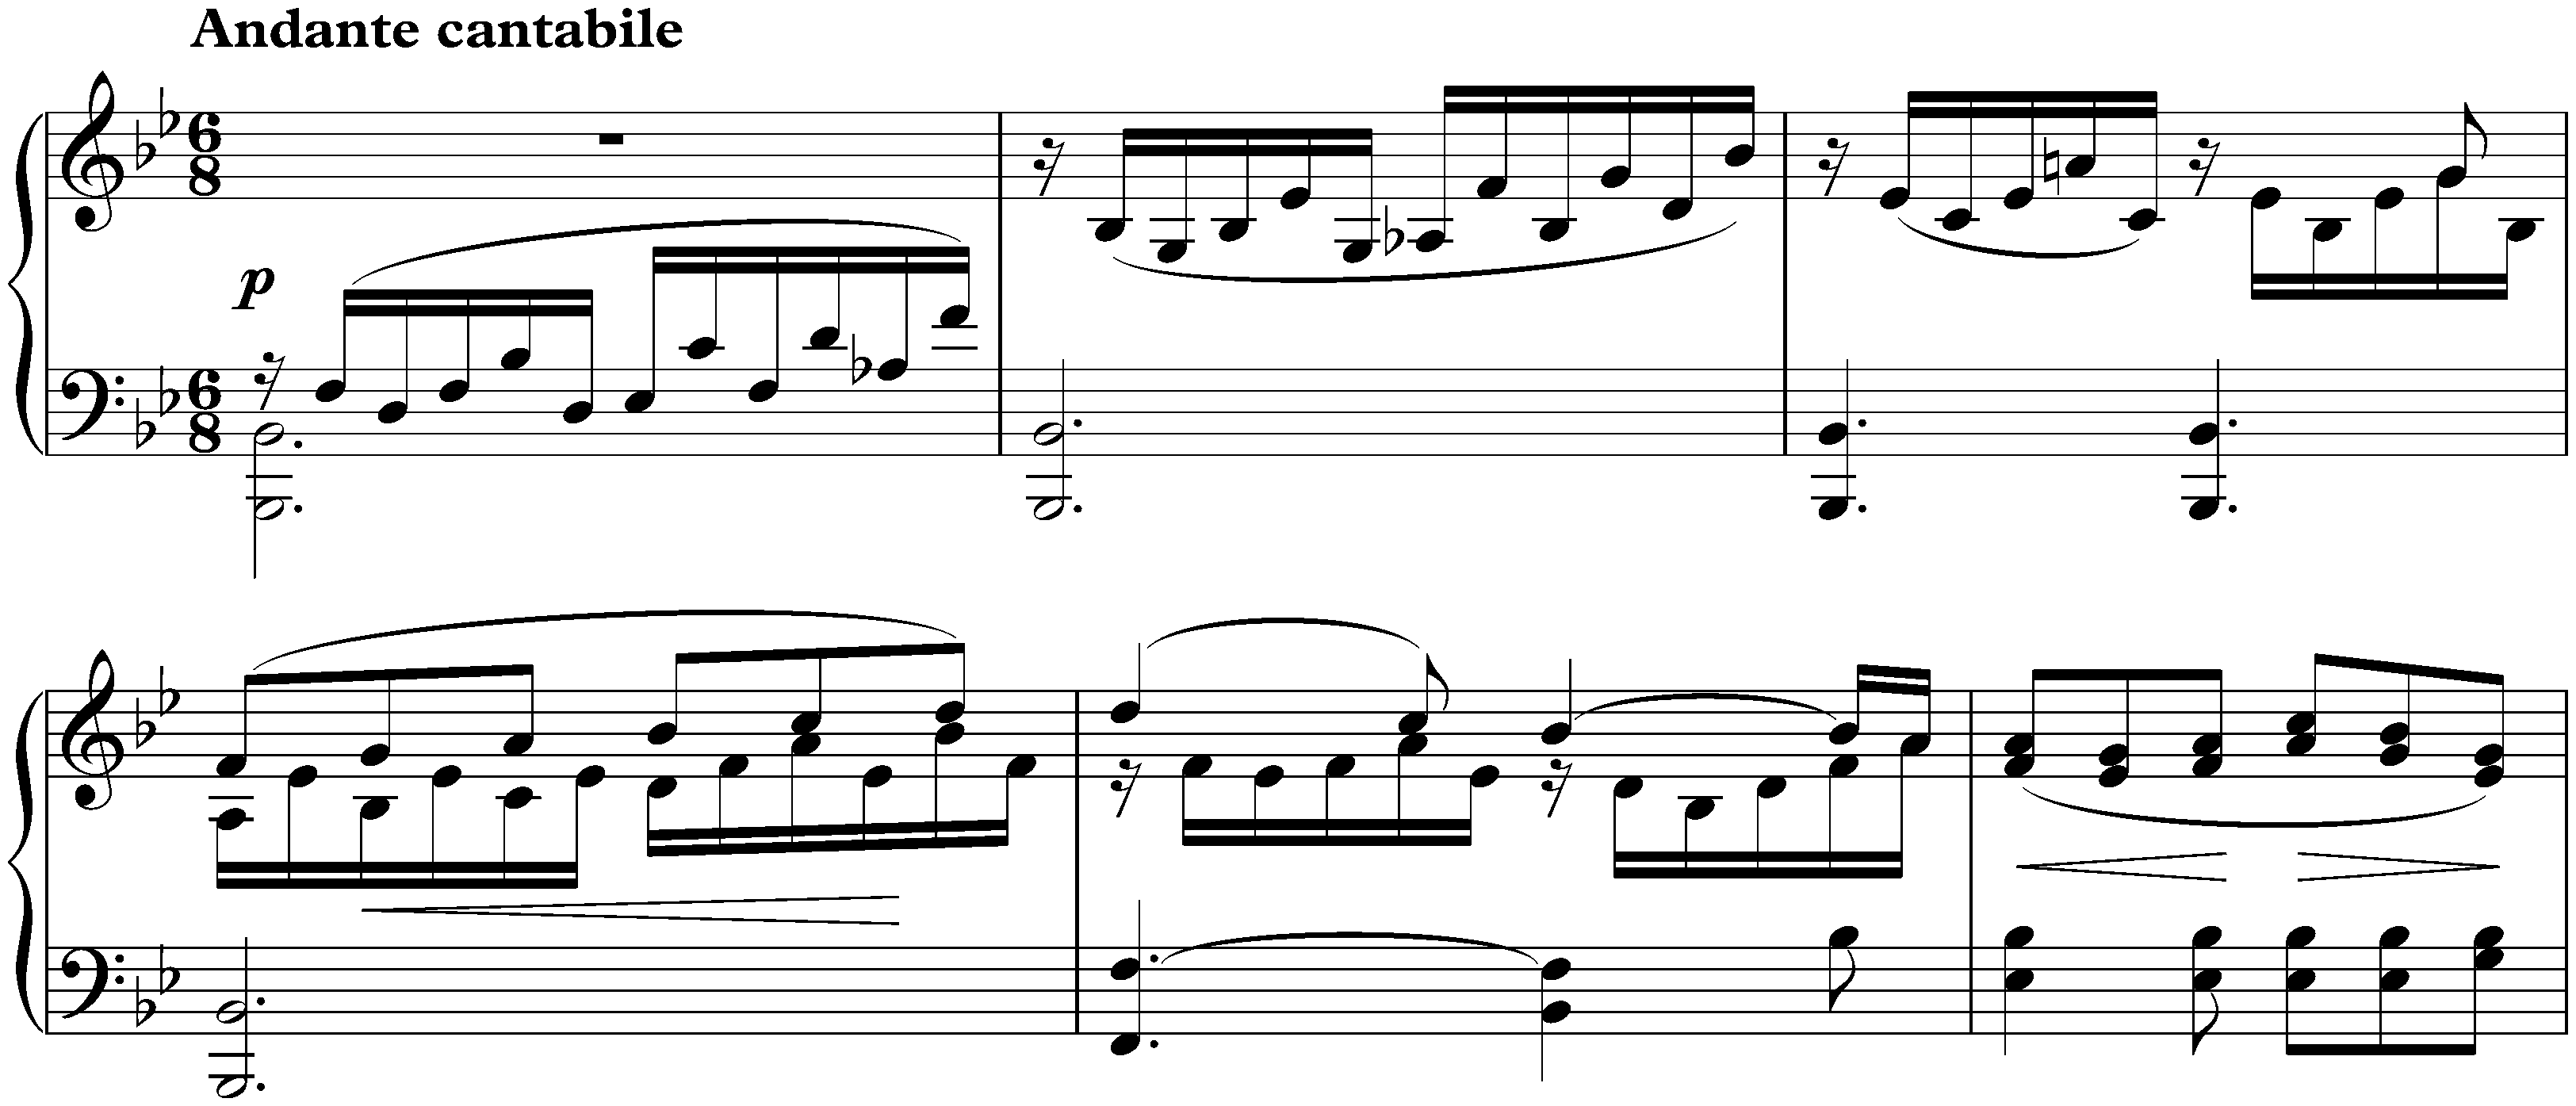 Andante cantabile in B-flat major, MWV U 93